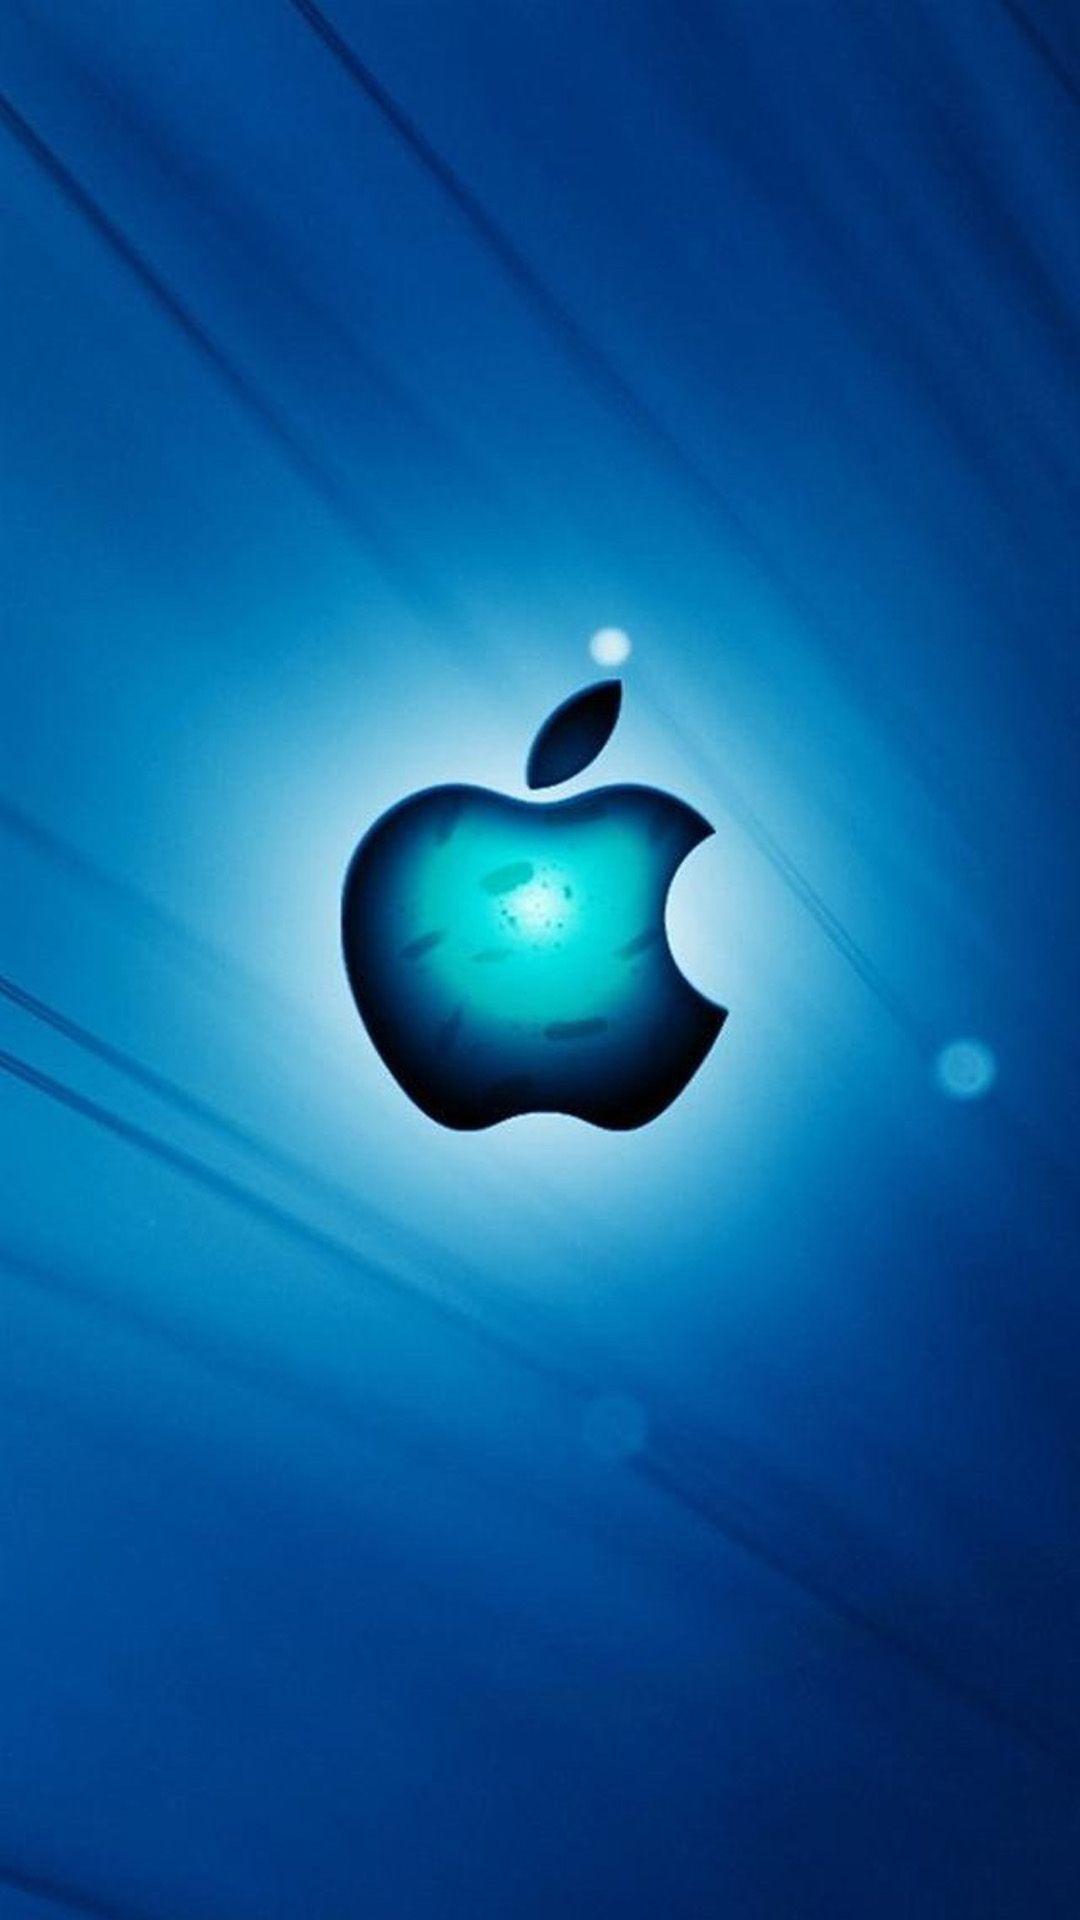 D Apple Logo iPhone Wallpaper iPod Wallpaper HD Free Download. HD